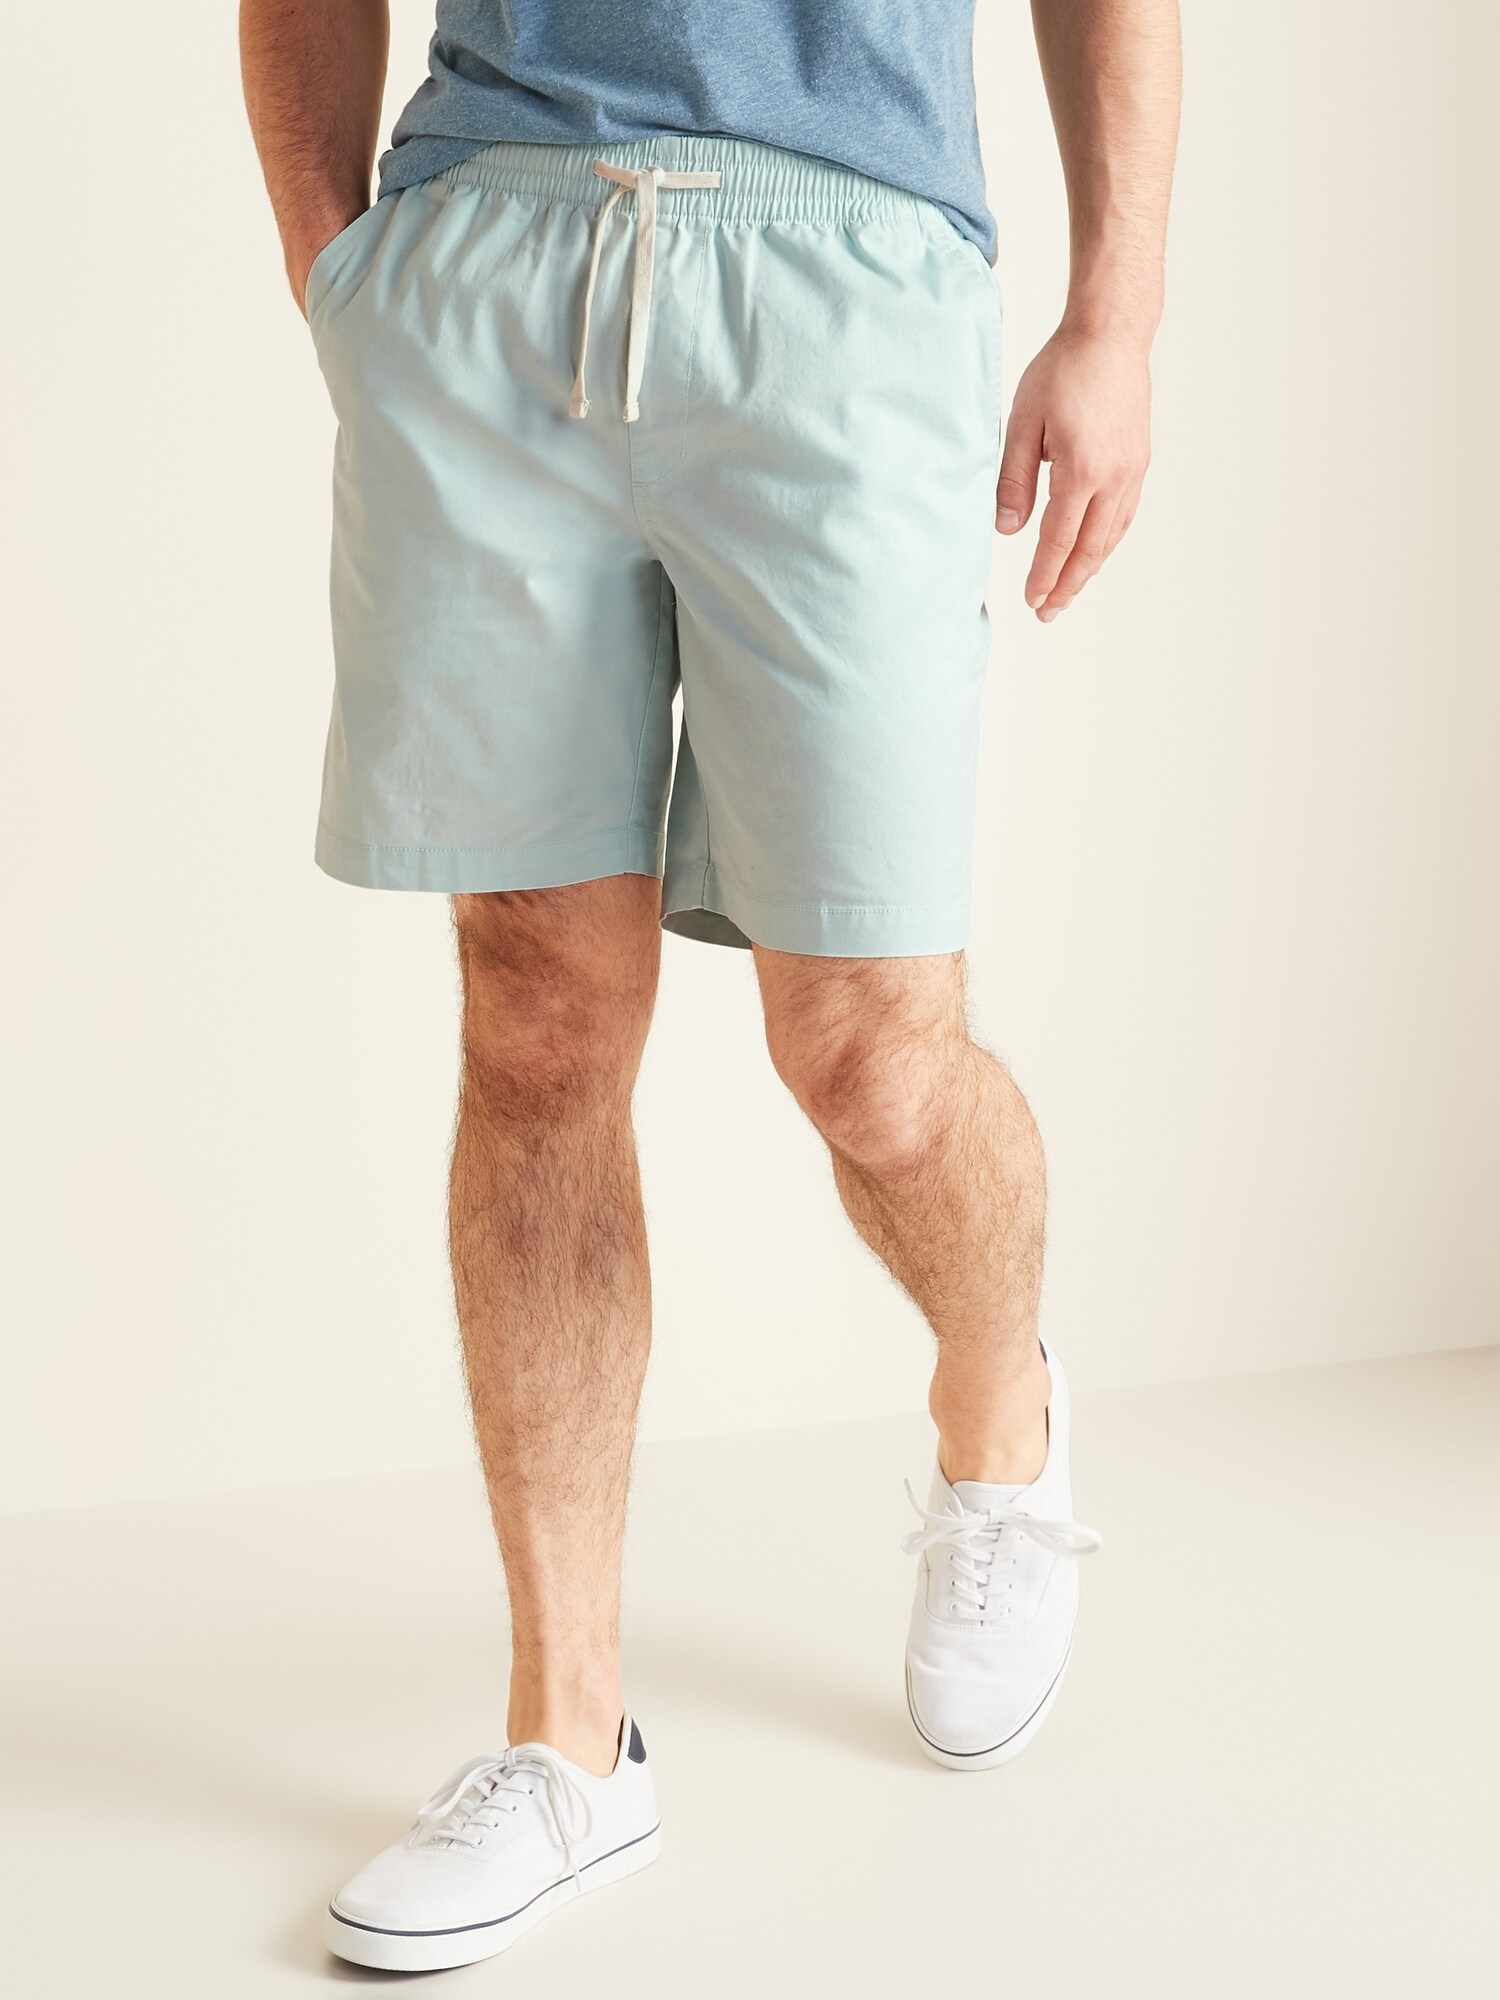 Twill Jogger Shorts for Men - 9-inch inseam